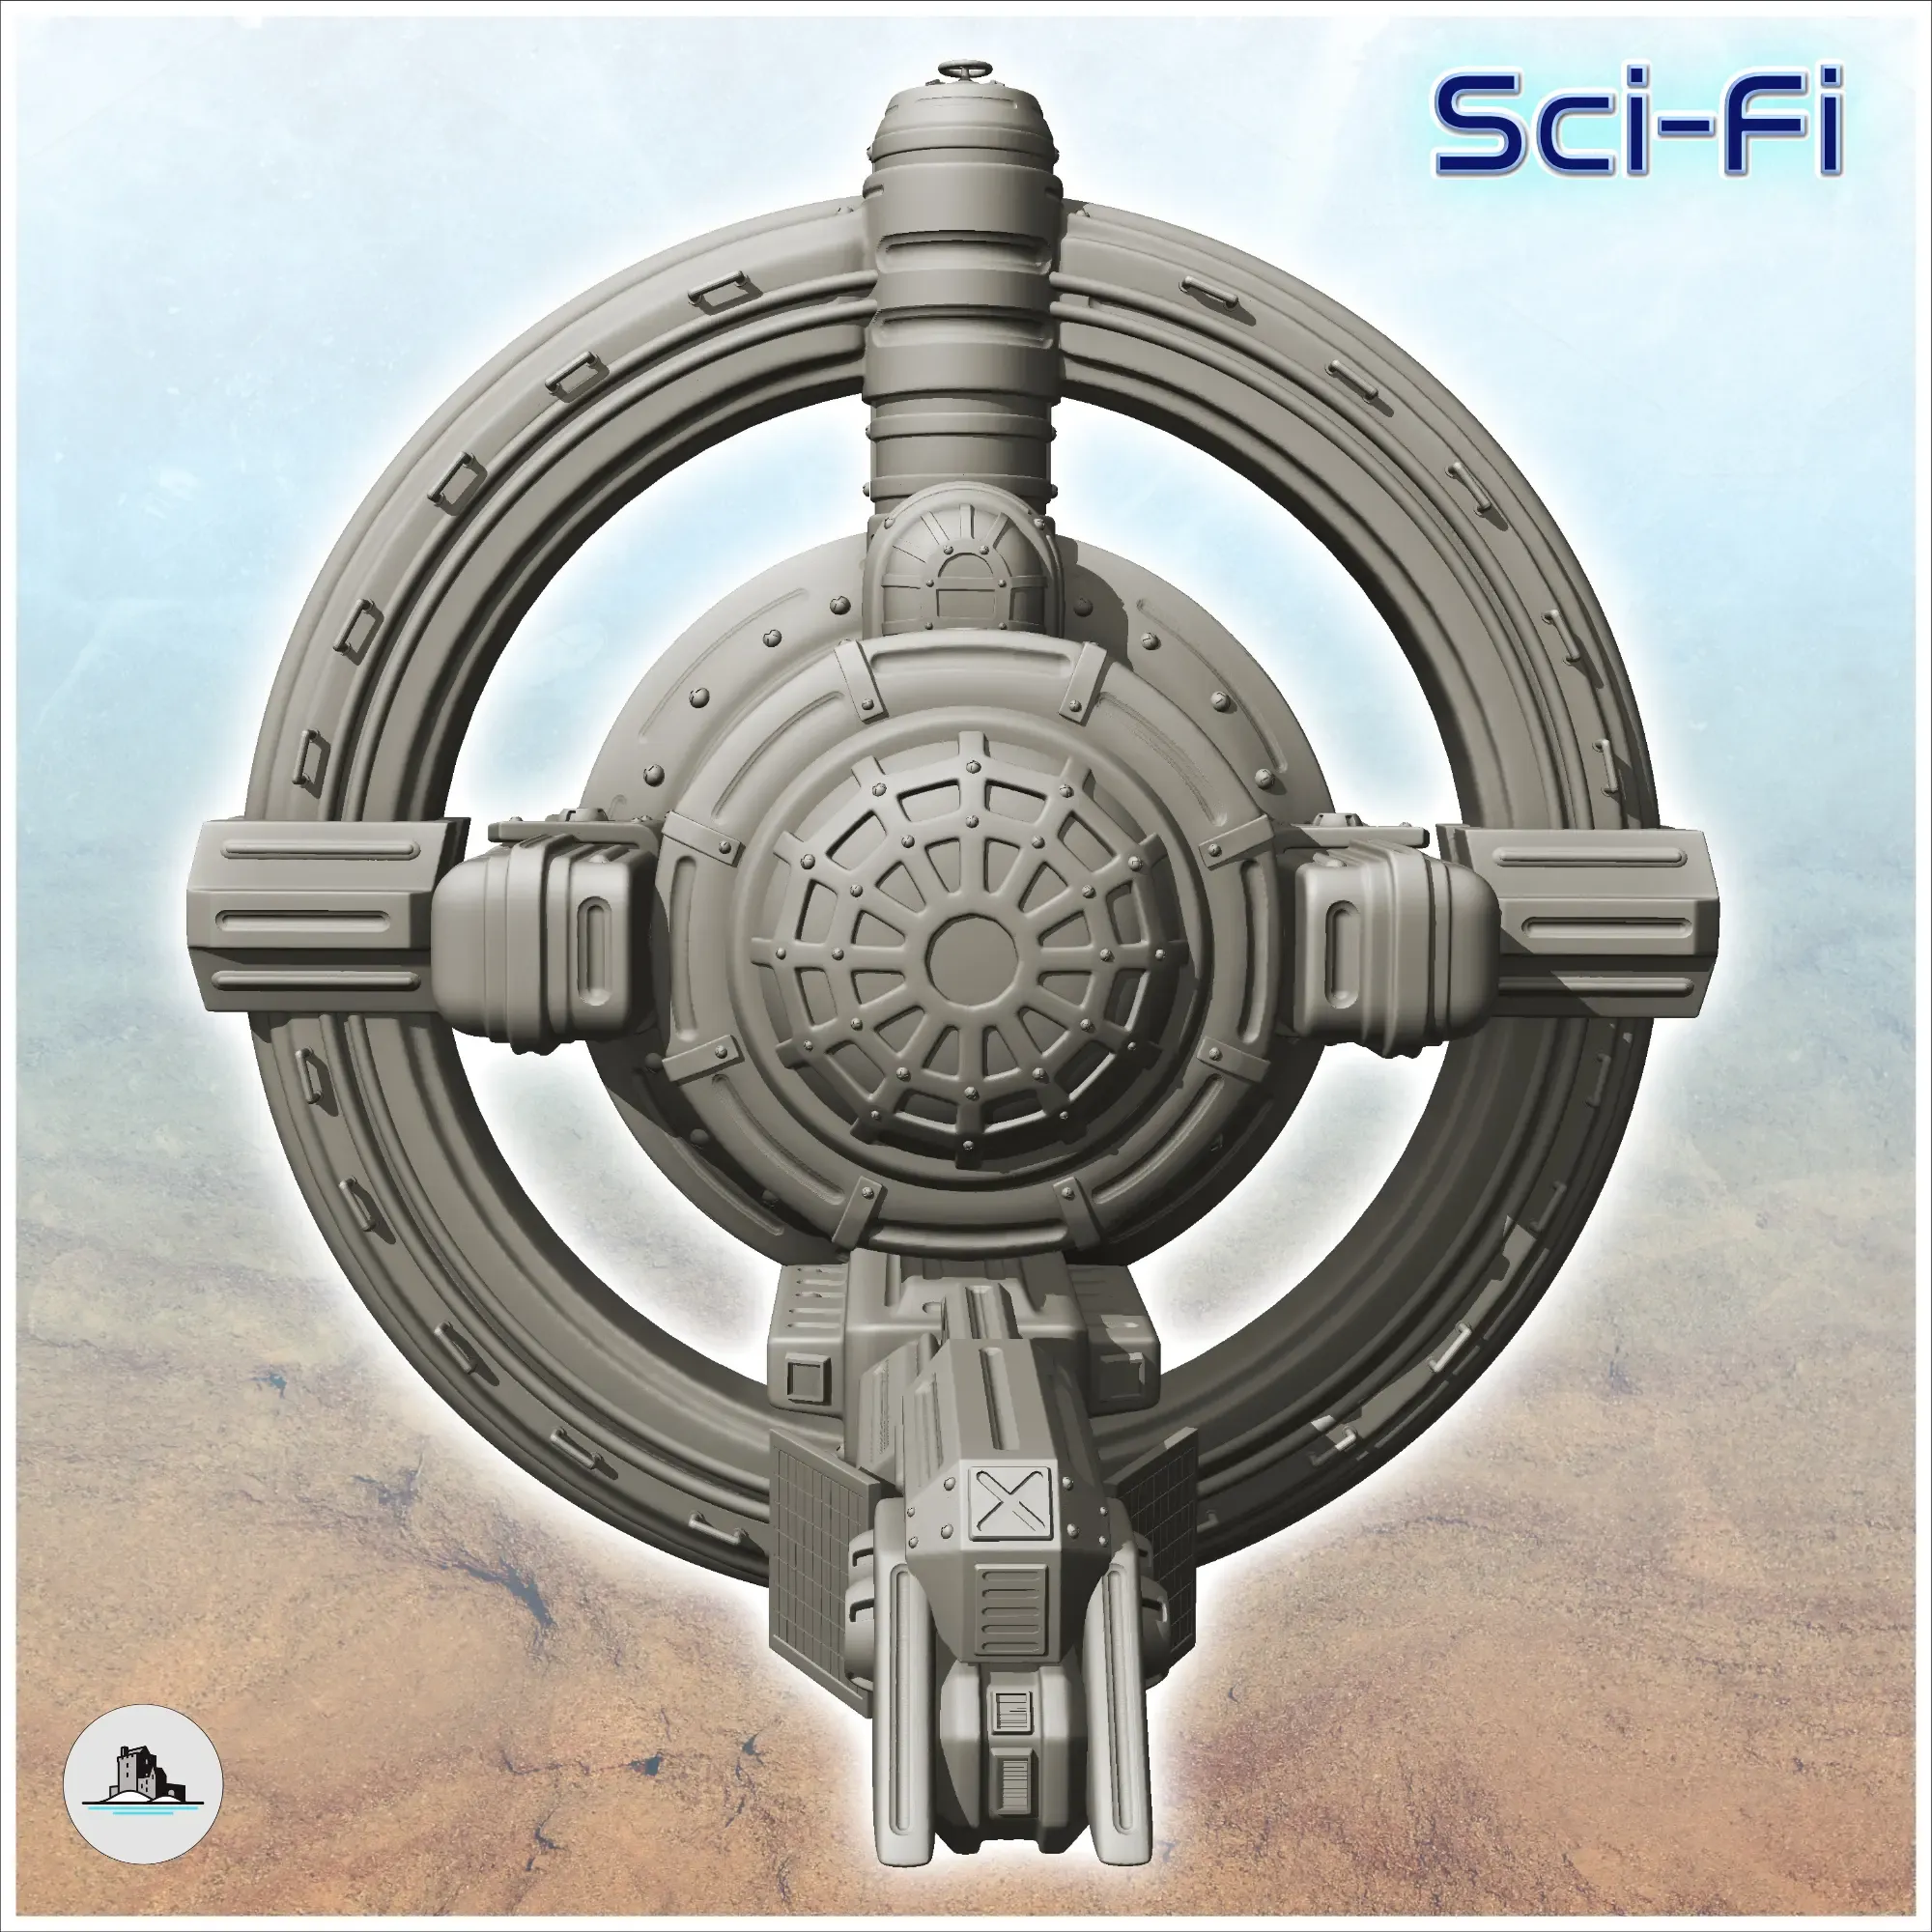 Large circular base - Terrain Scifi Science fiction SF